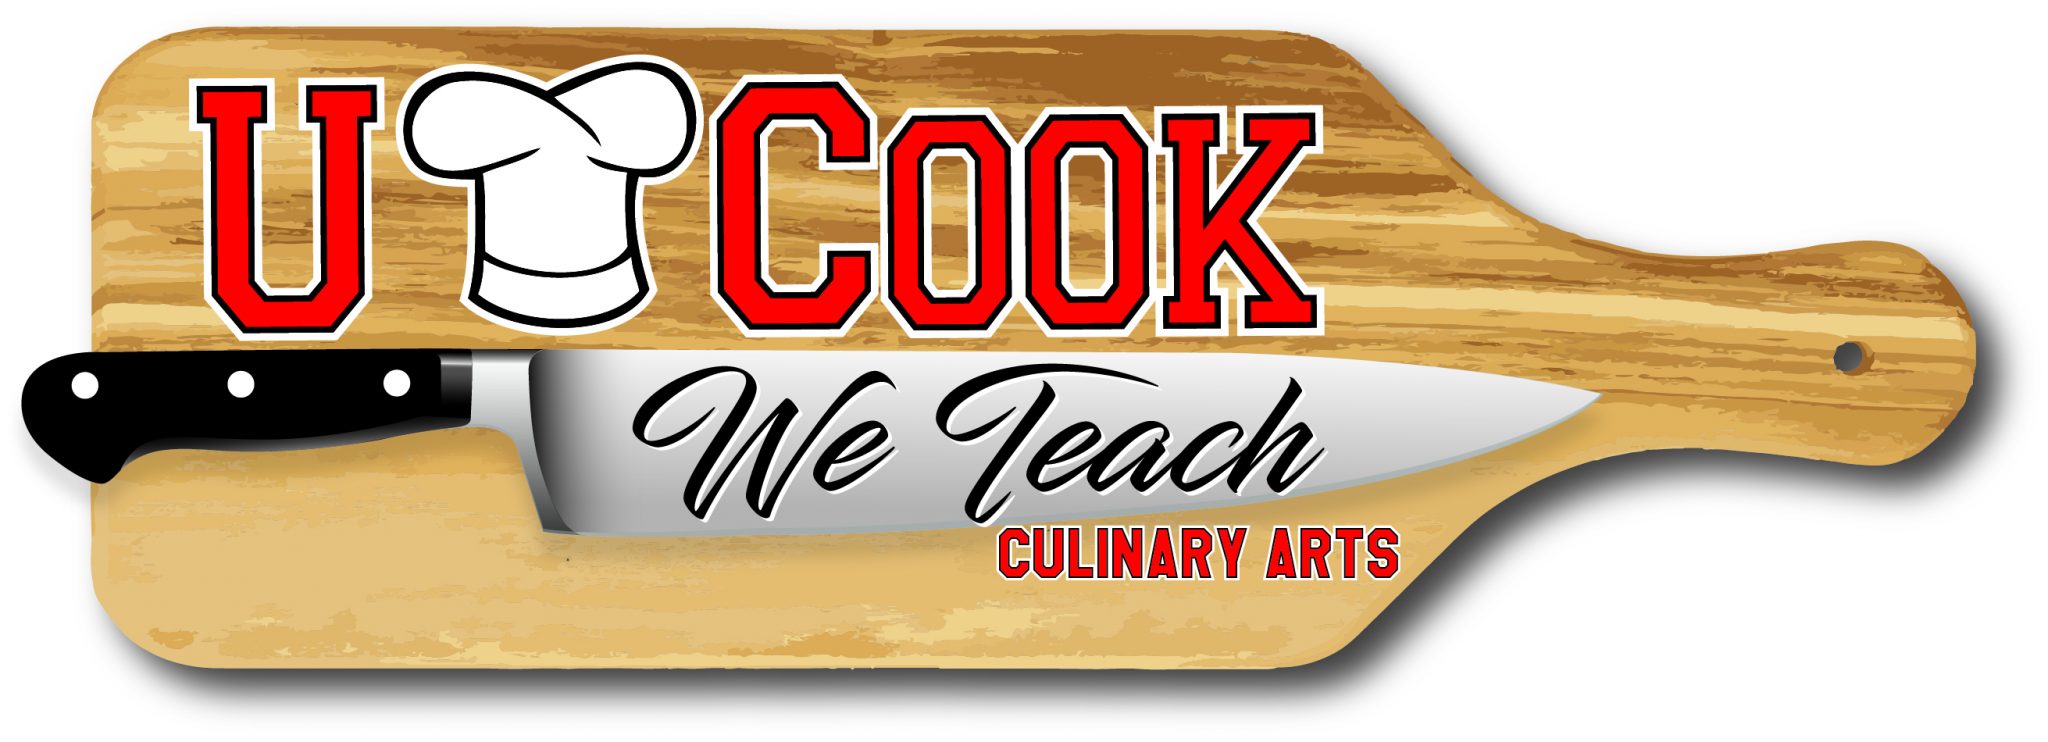 UCook We Teach Culinary Arts (4th Class)